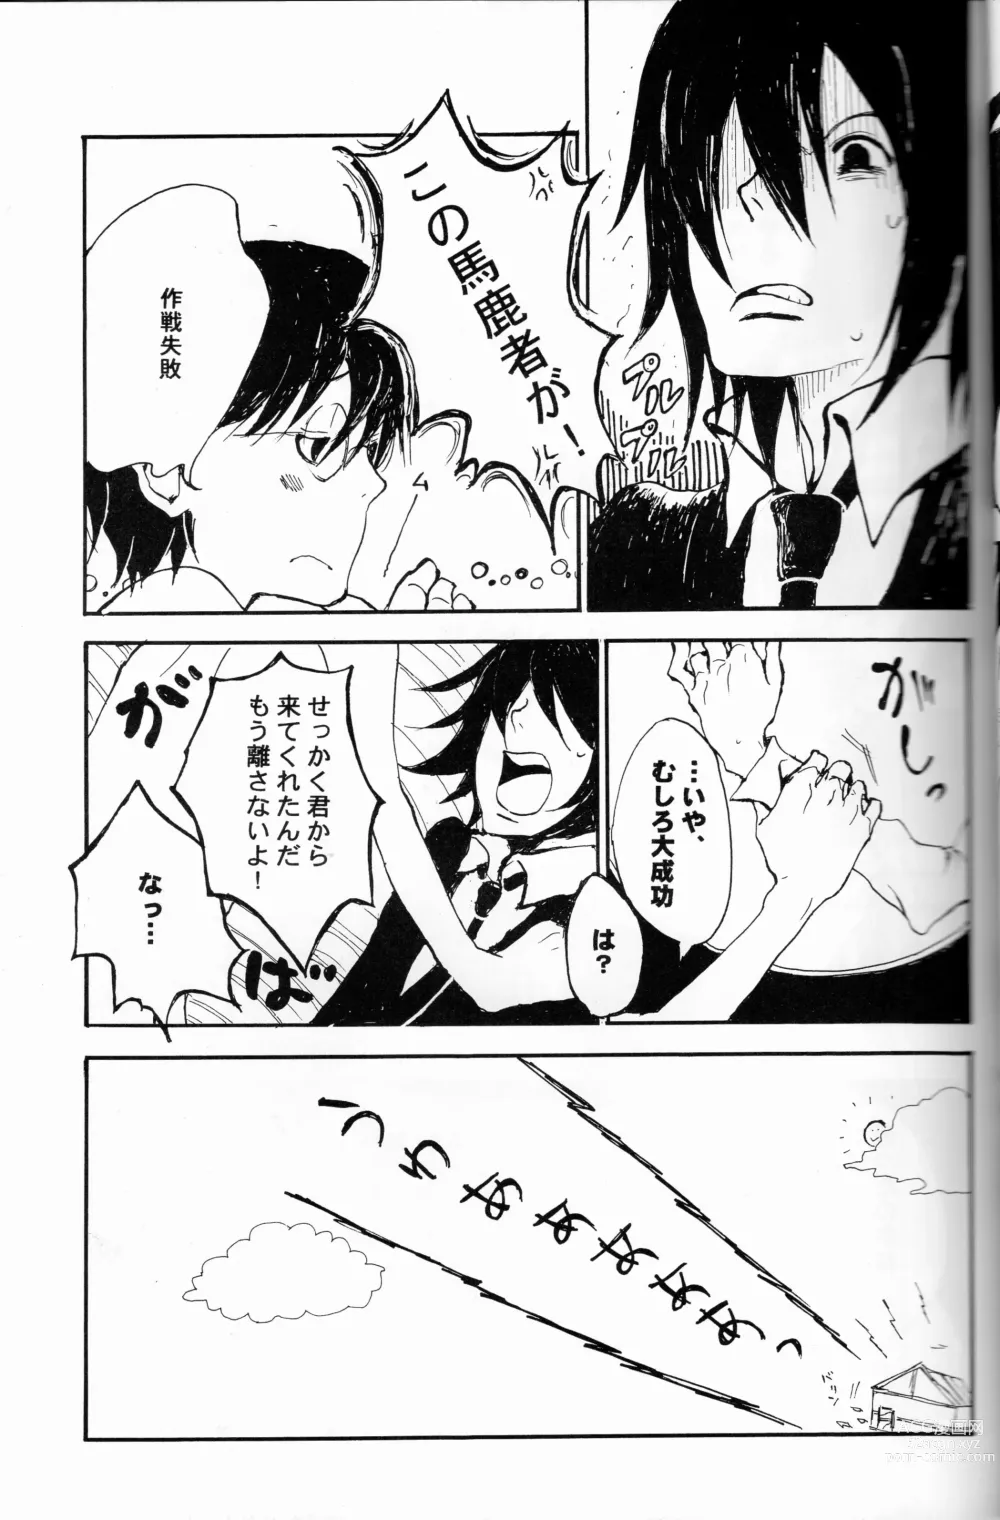 Page 18 of doujinshi 44